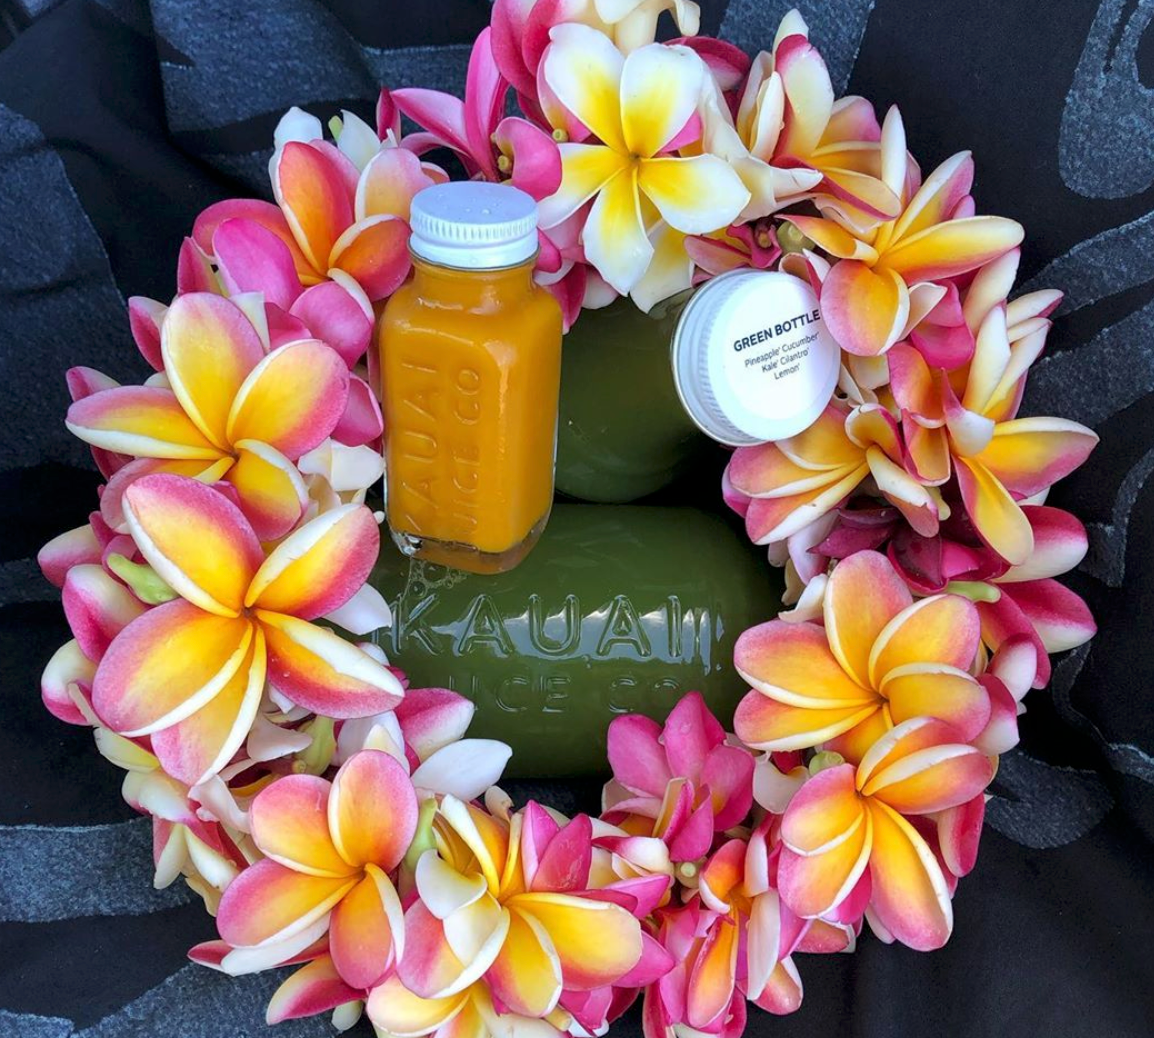 Kauai Juice Co. elixirs in store